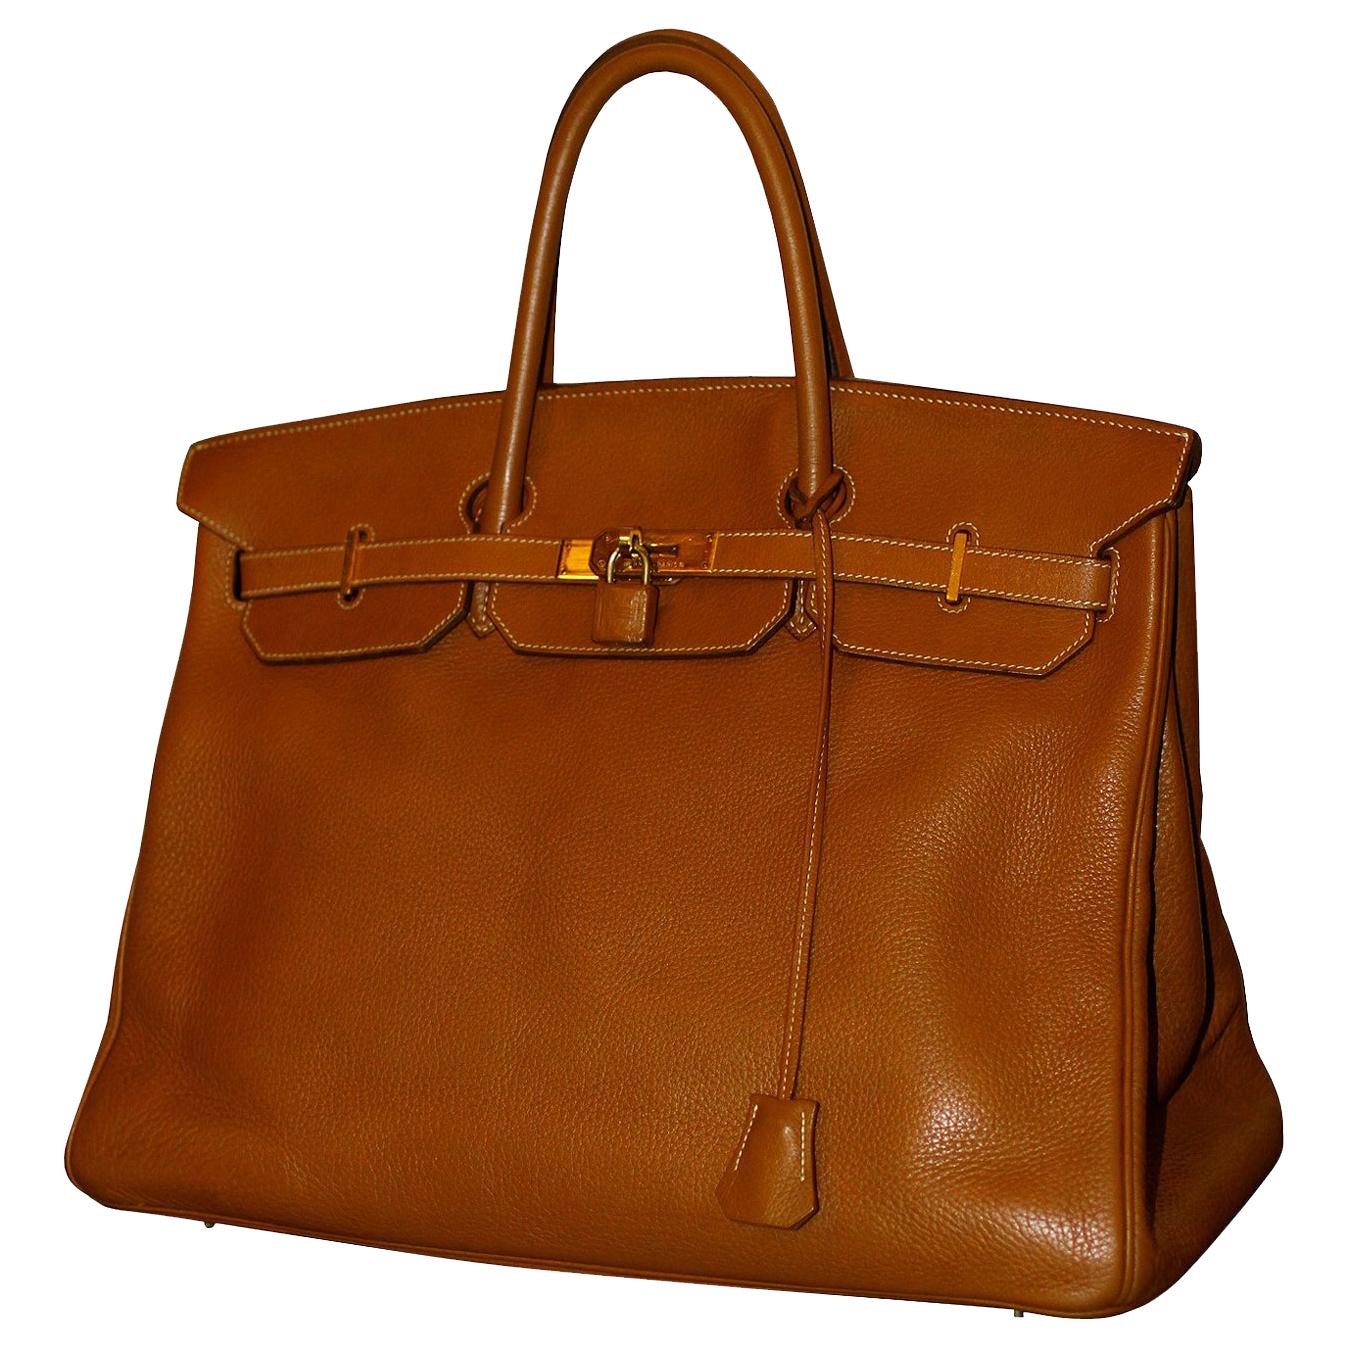 Hermes Birkin Bag 40 from Hermès Staff